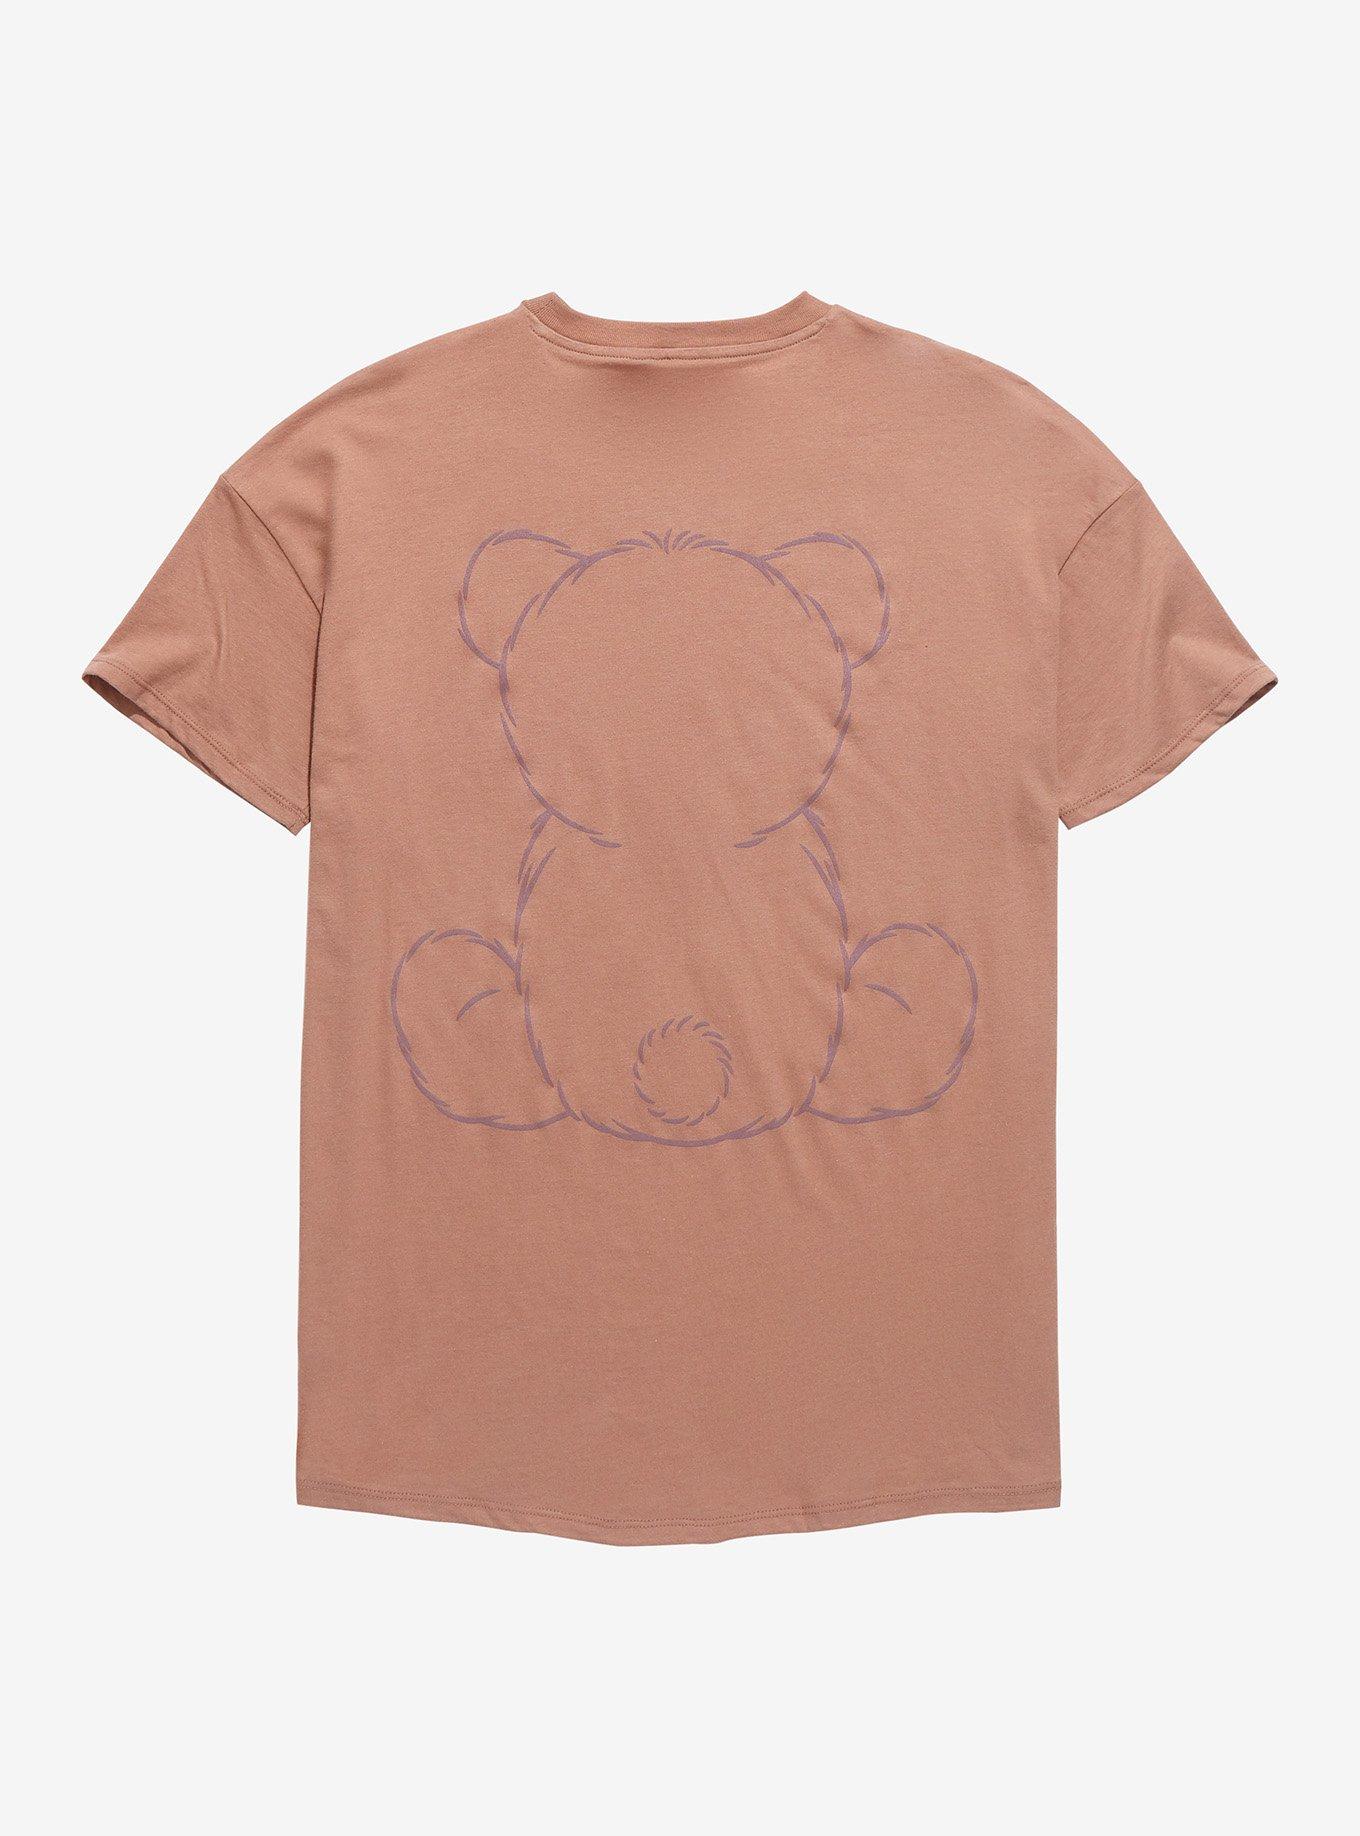 Brown Teddy Bear Boyfriend Fit Girls T-Shirt, MULTI, alternate